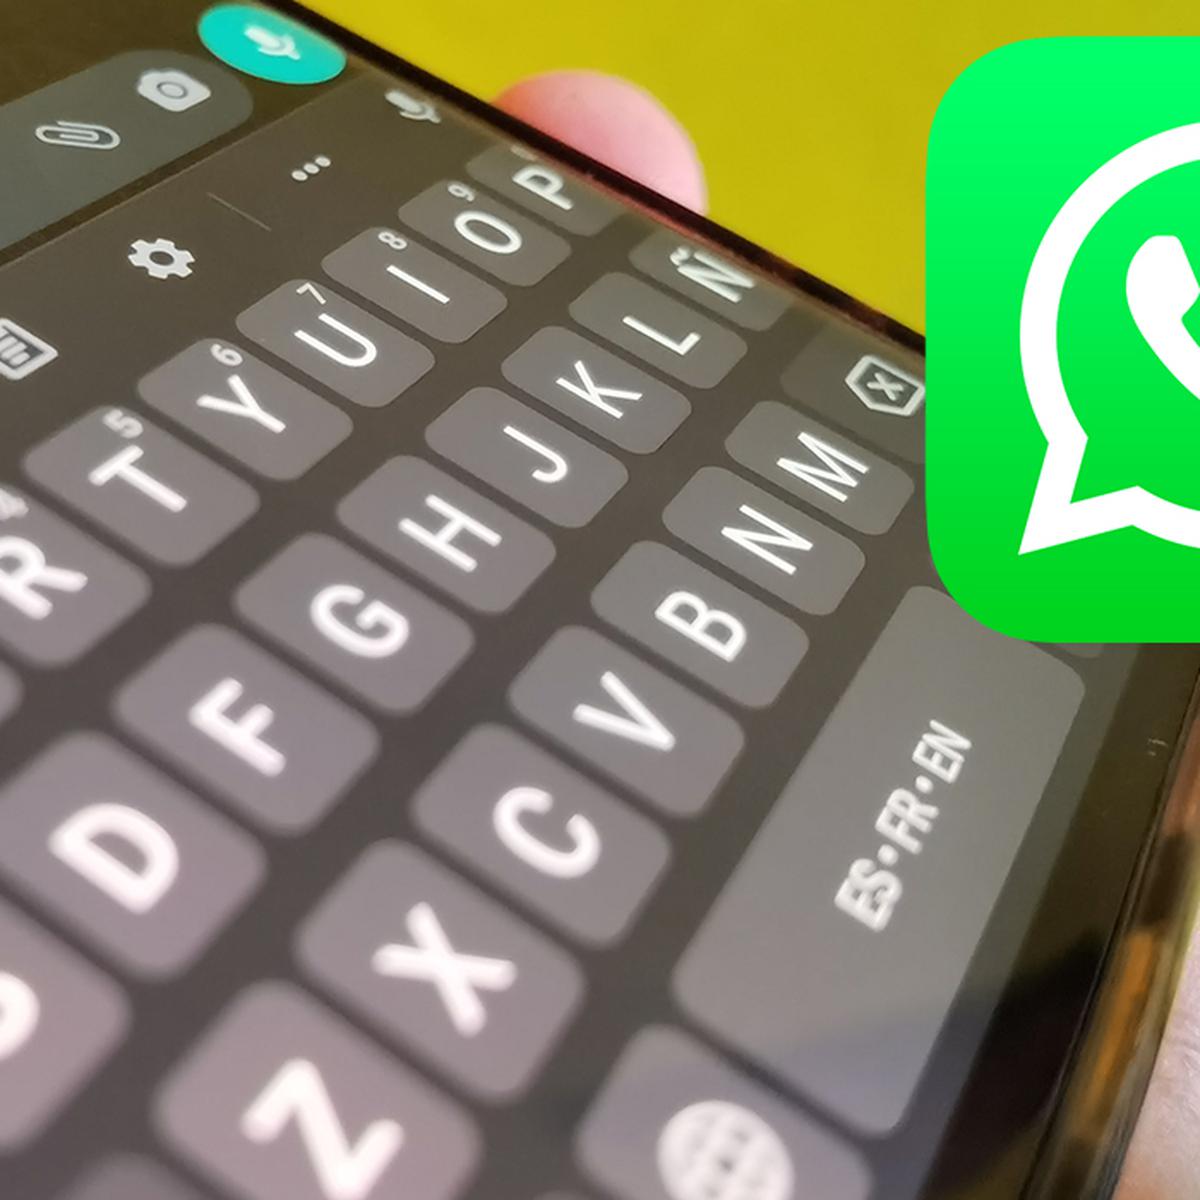 WhatsApp: pasos para cambiar idioma del teclado Gboard Mexico | España | Tutorial | Guia | Tips | | DEPOR